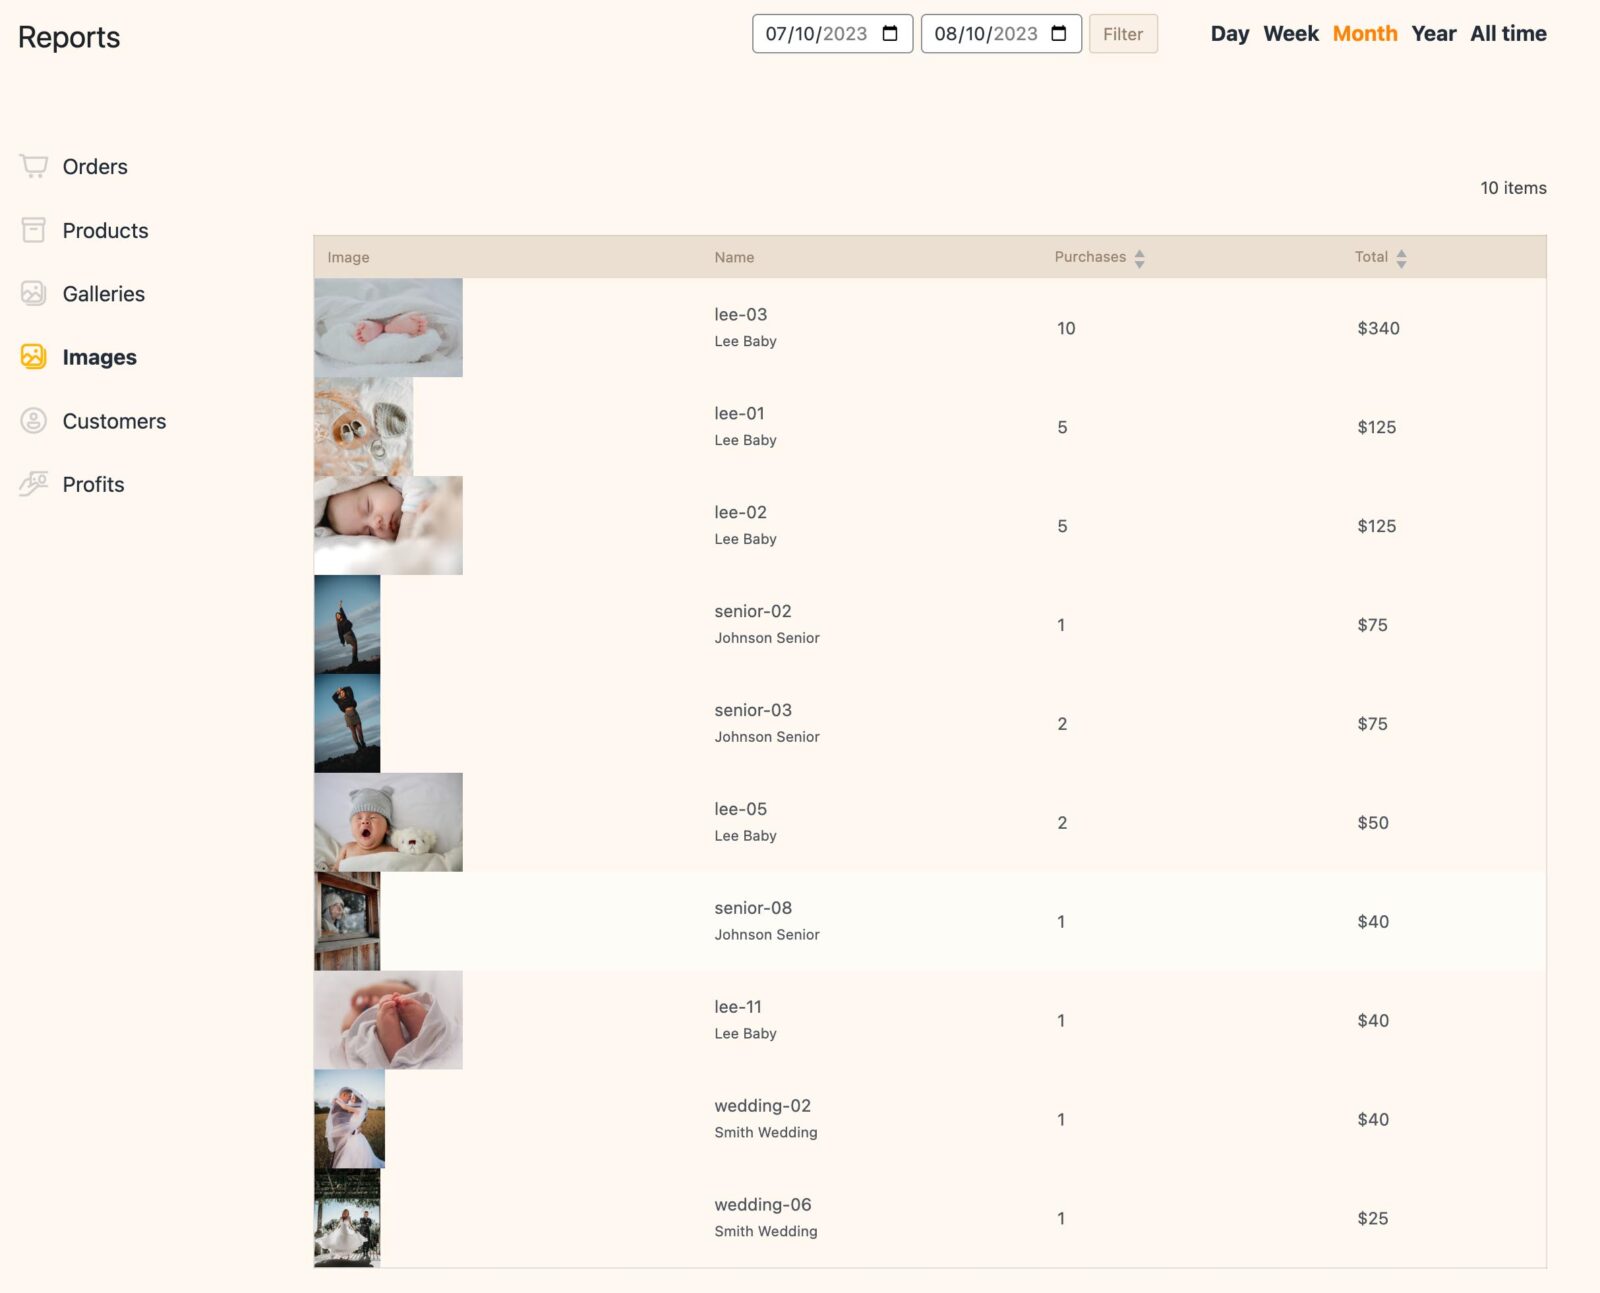 Screenshot of individual image sales data